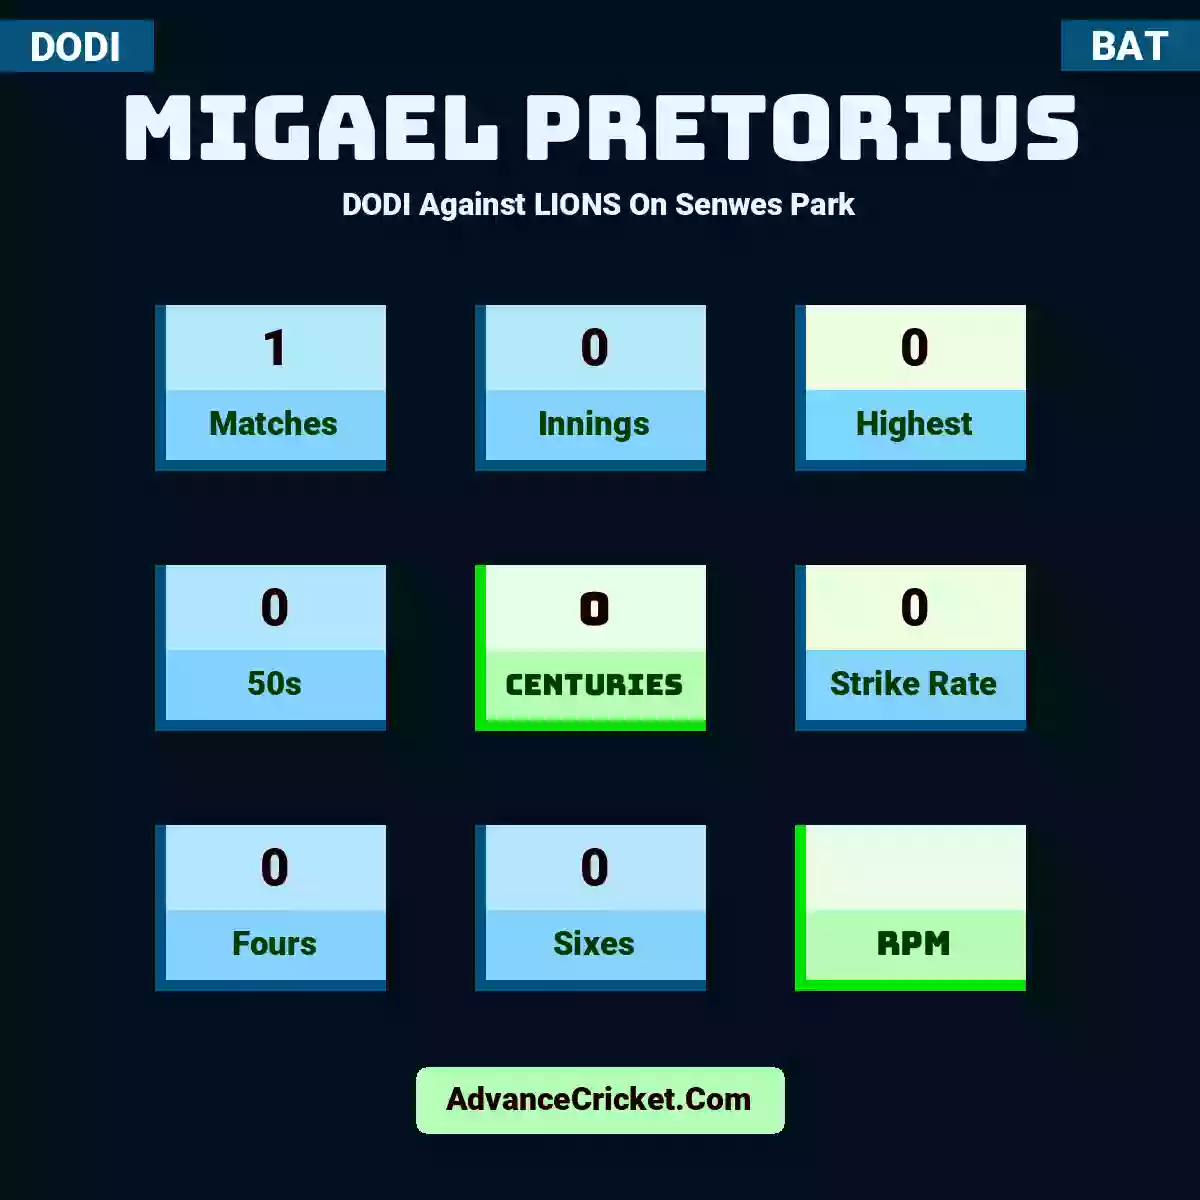 Migael Pretorius DODI  Against LIONS On Senwes Park, Migael Pretorius played 1 matches, scored 0 runs as highest, 0 half-centuries, and 0 centuries, with a strike rate of 0. M.Pretorius hit 0 fours and 0 sixes.